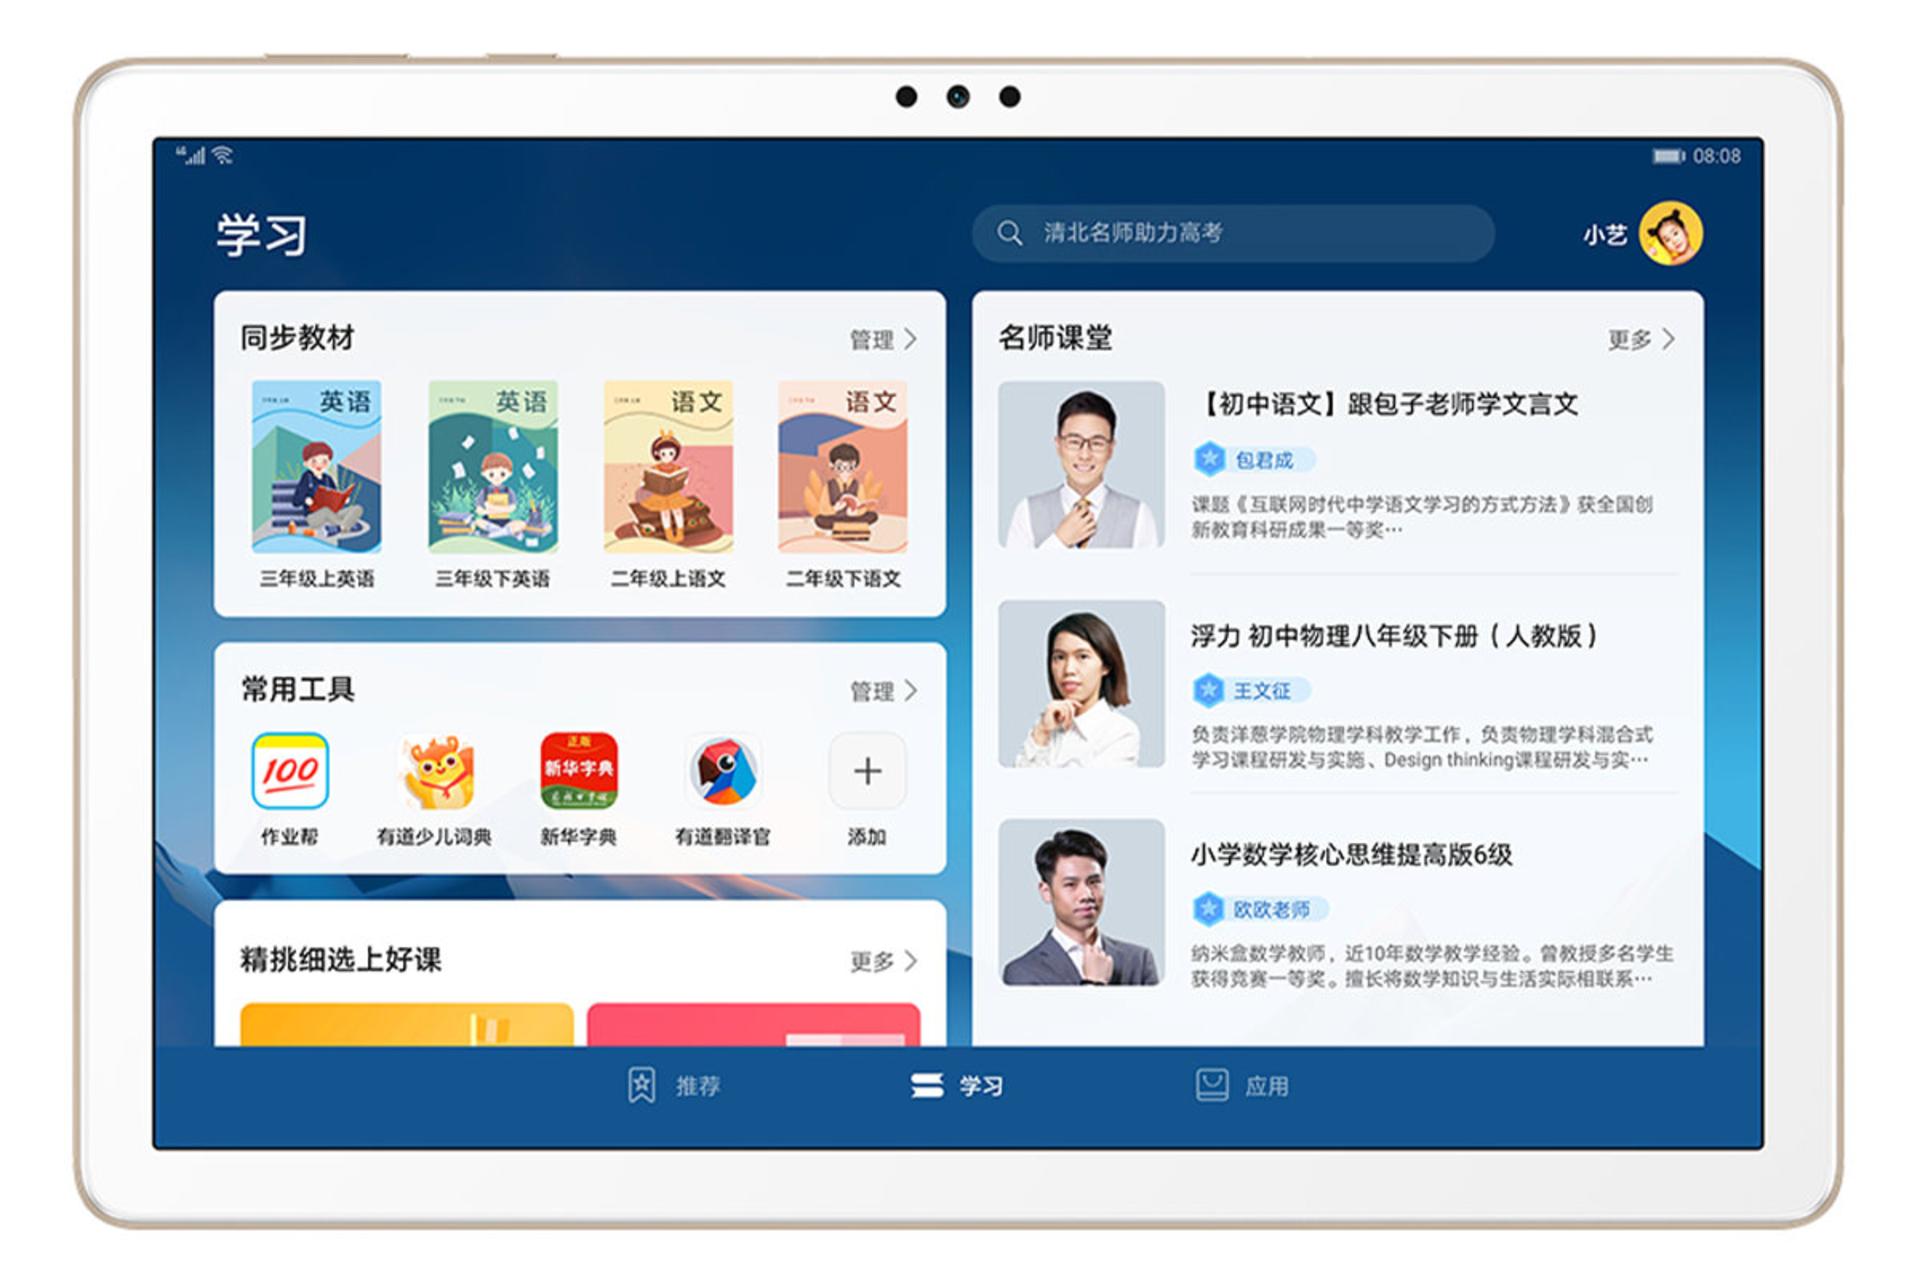 مرجع متخصصين ايران تبلت اينجوي تبلت 2 هواوي صفحه نمايش در حال نمايش اپليكيشن / Huawei Enjoy Tablet 2